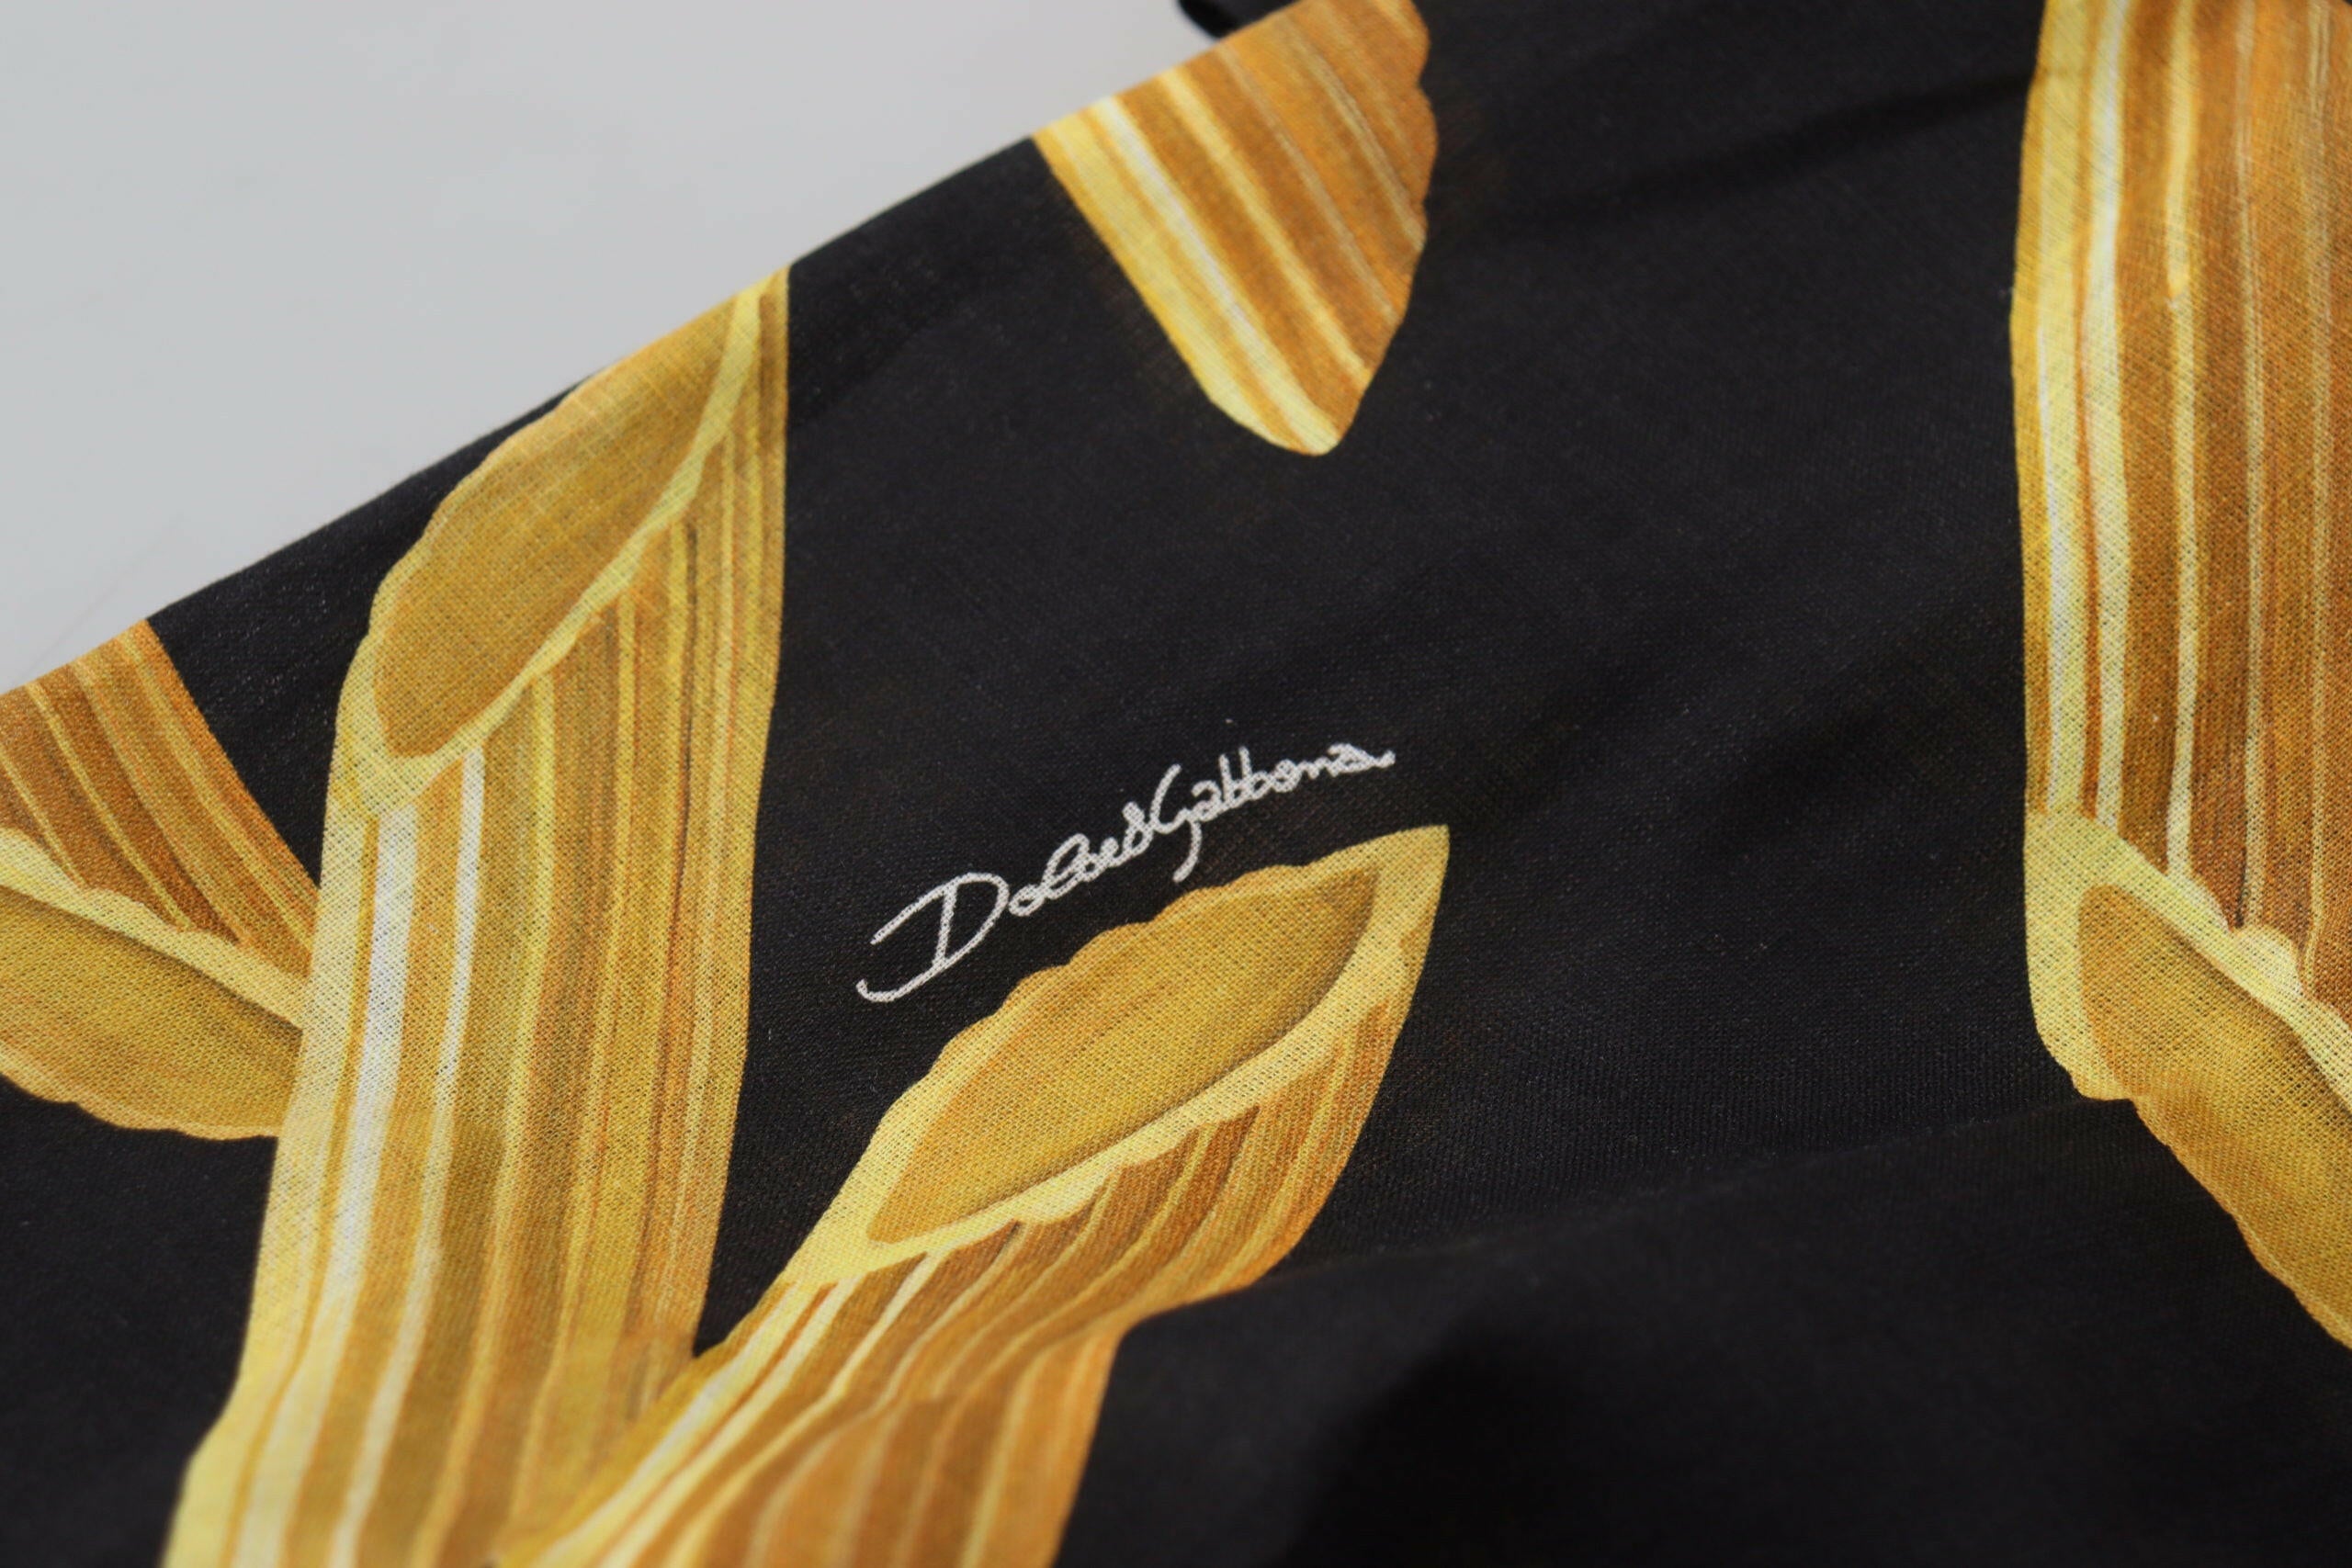 Dolce & Gabbana Black Casual Penne Rigate Linen Casual Shirt - GENUINE AUTHENTIC BRAND LLC  